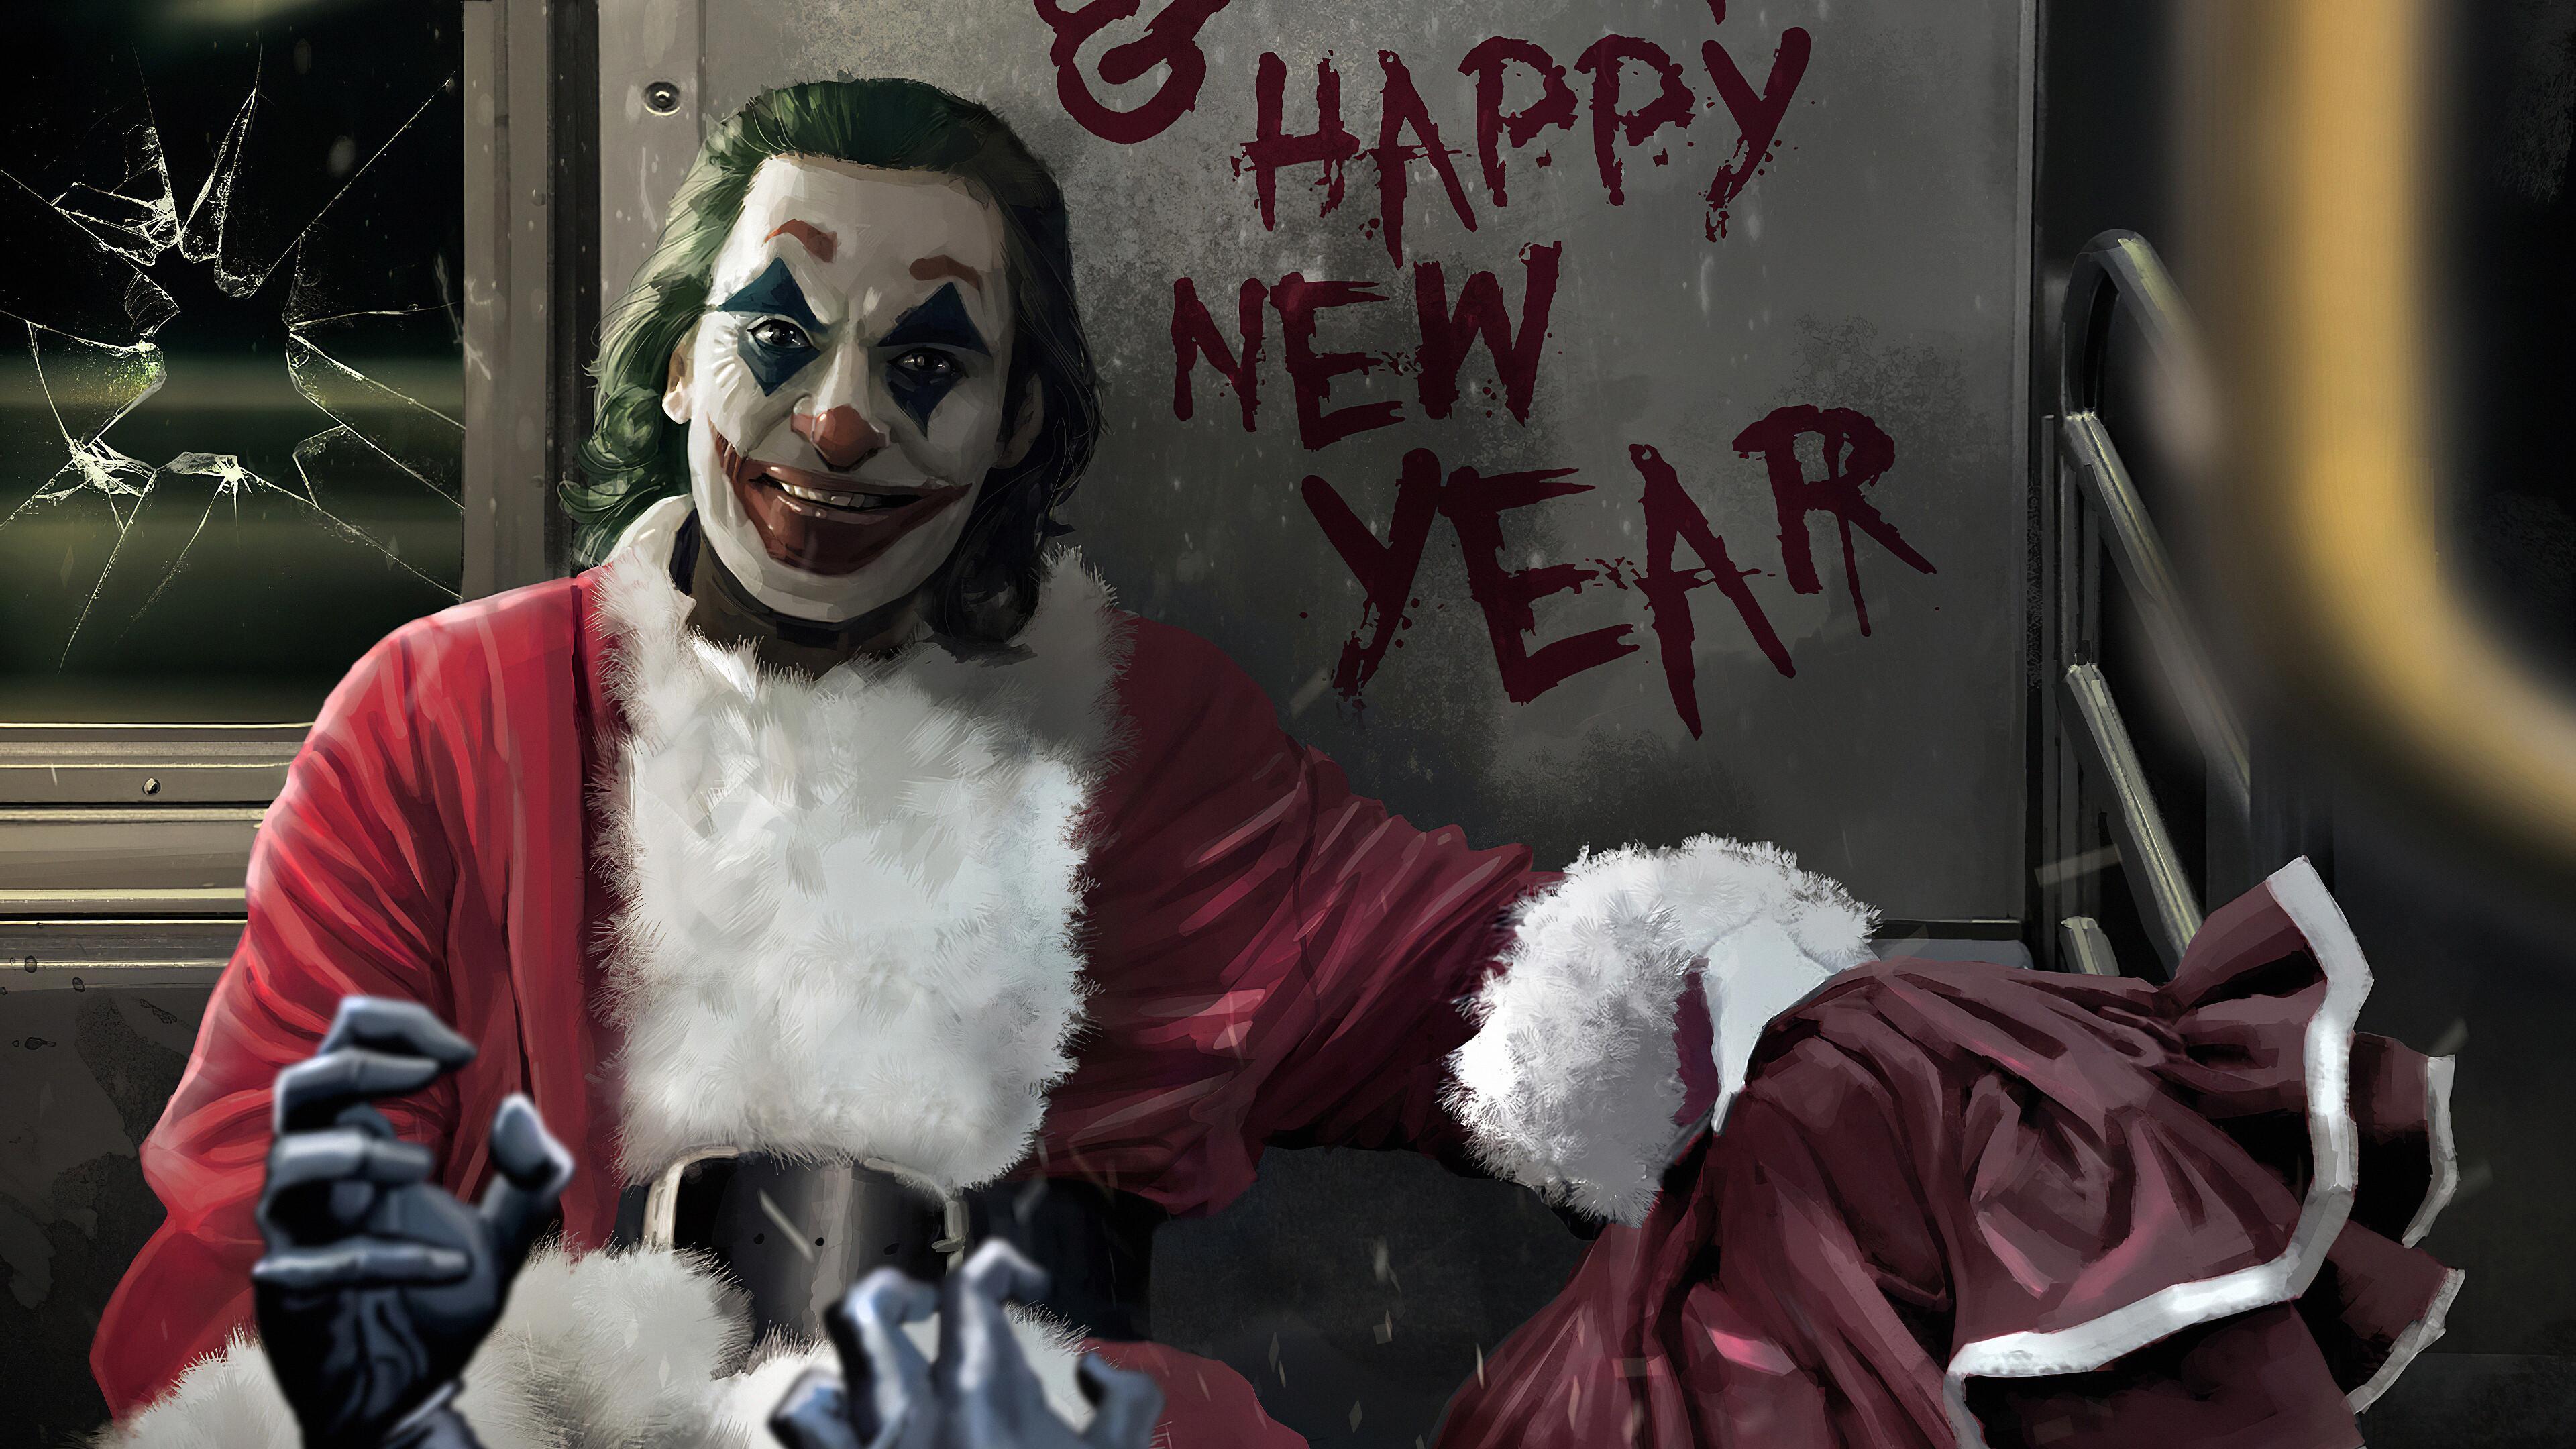 HD wallpaper, Joaquin Phoenix, 4K, Joker, Happy New Year